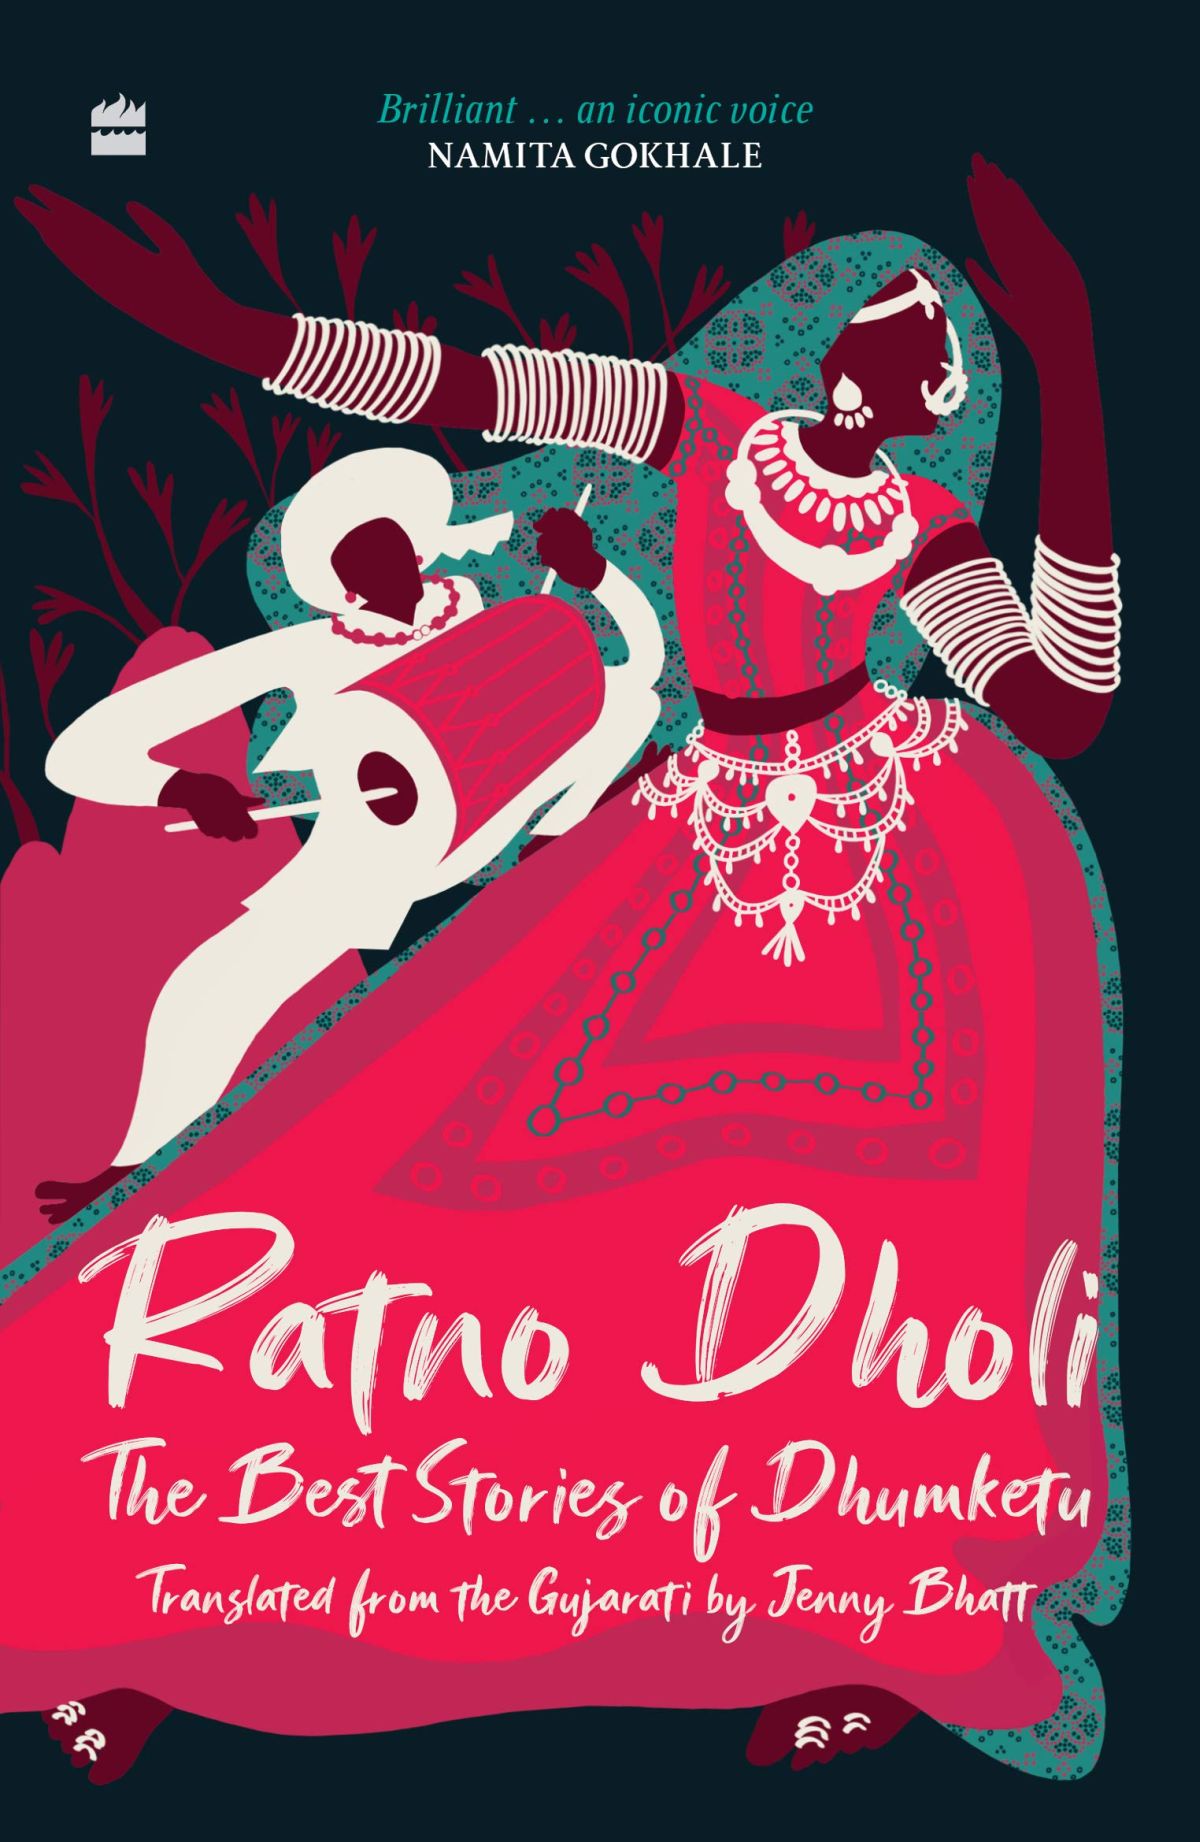 Ratno Dholi by Dhumketu